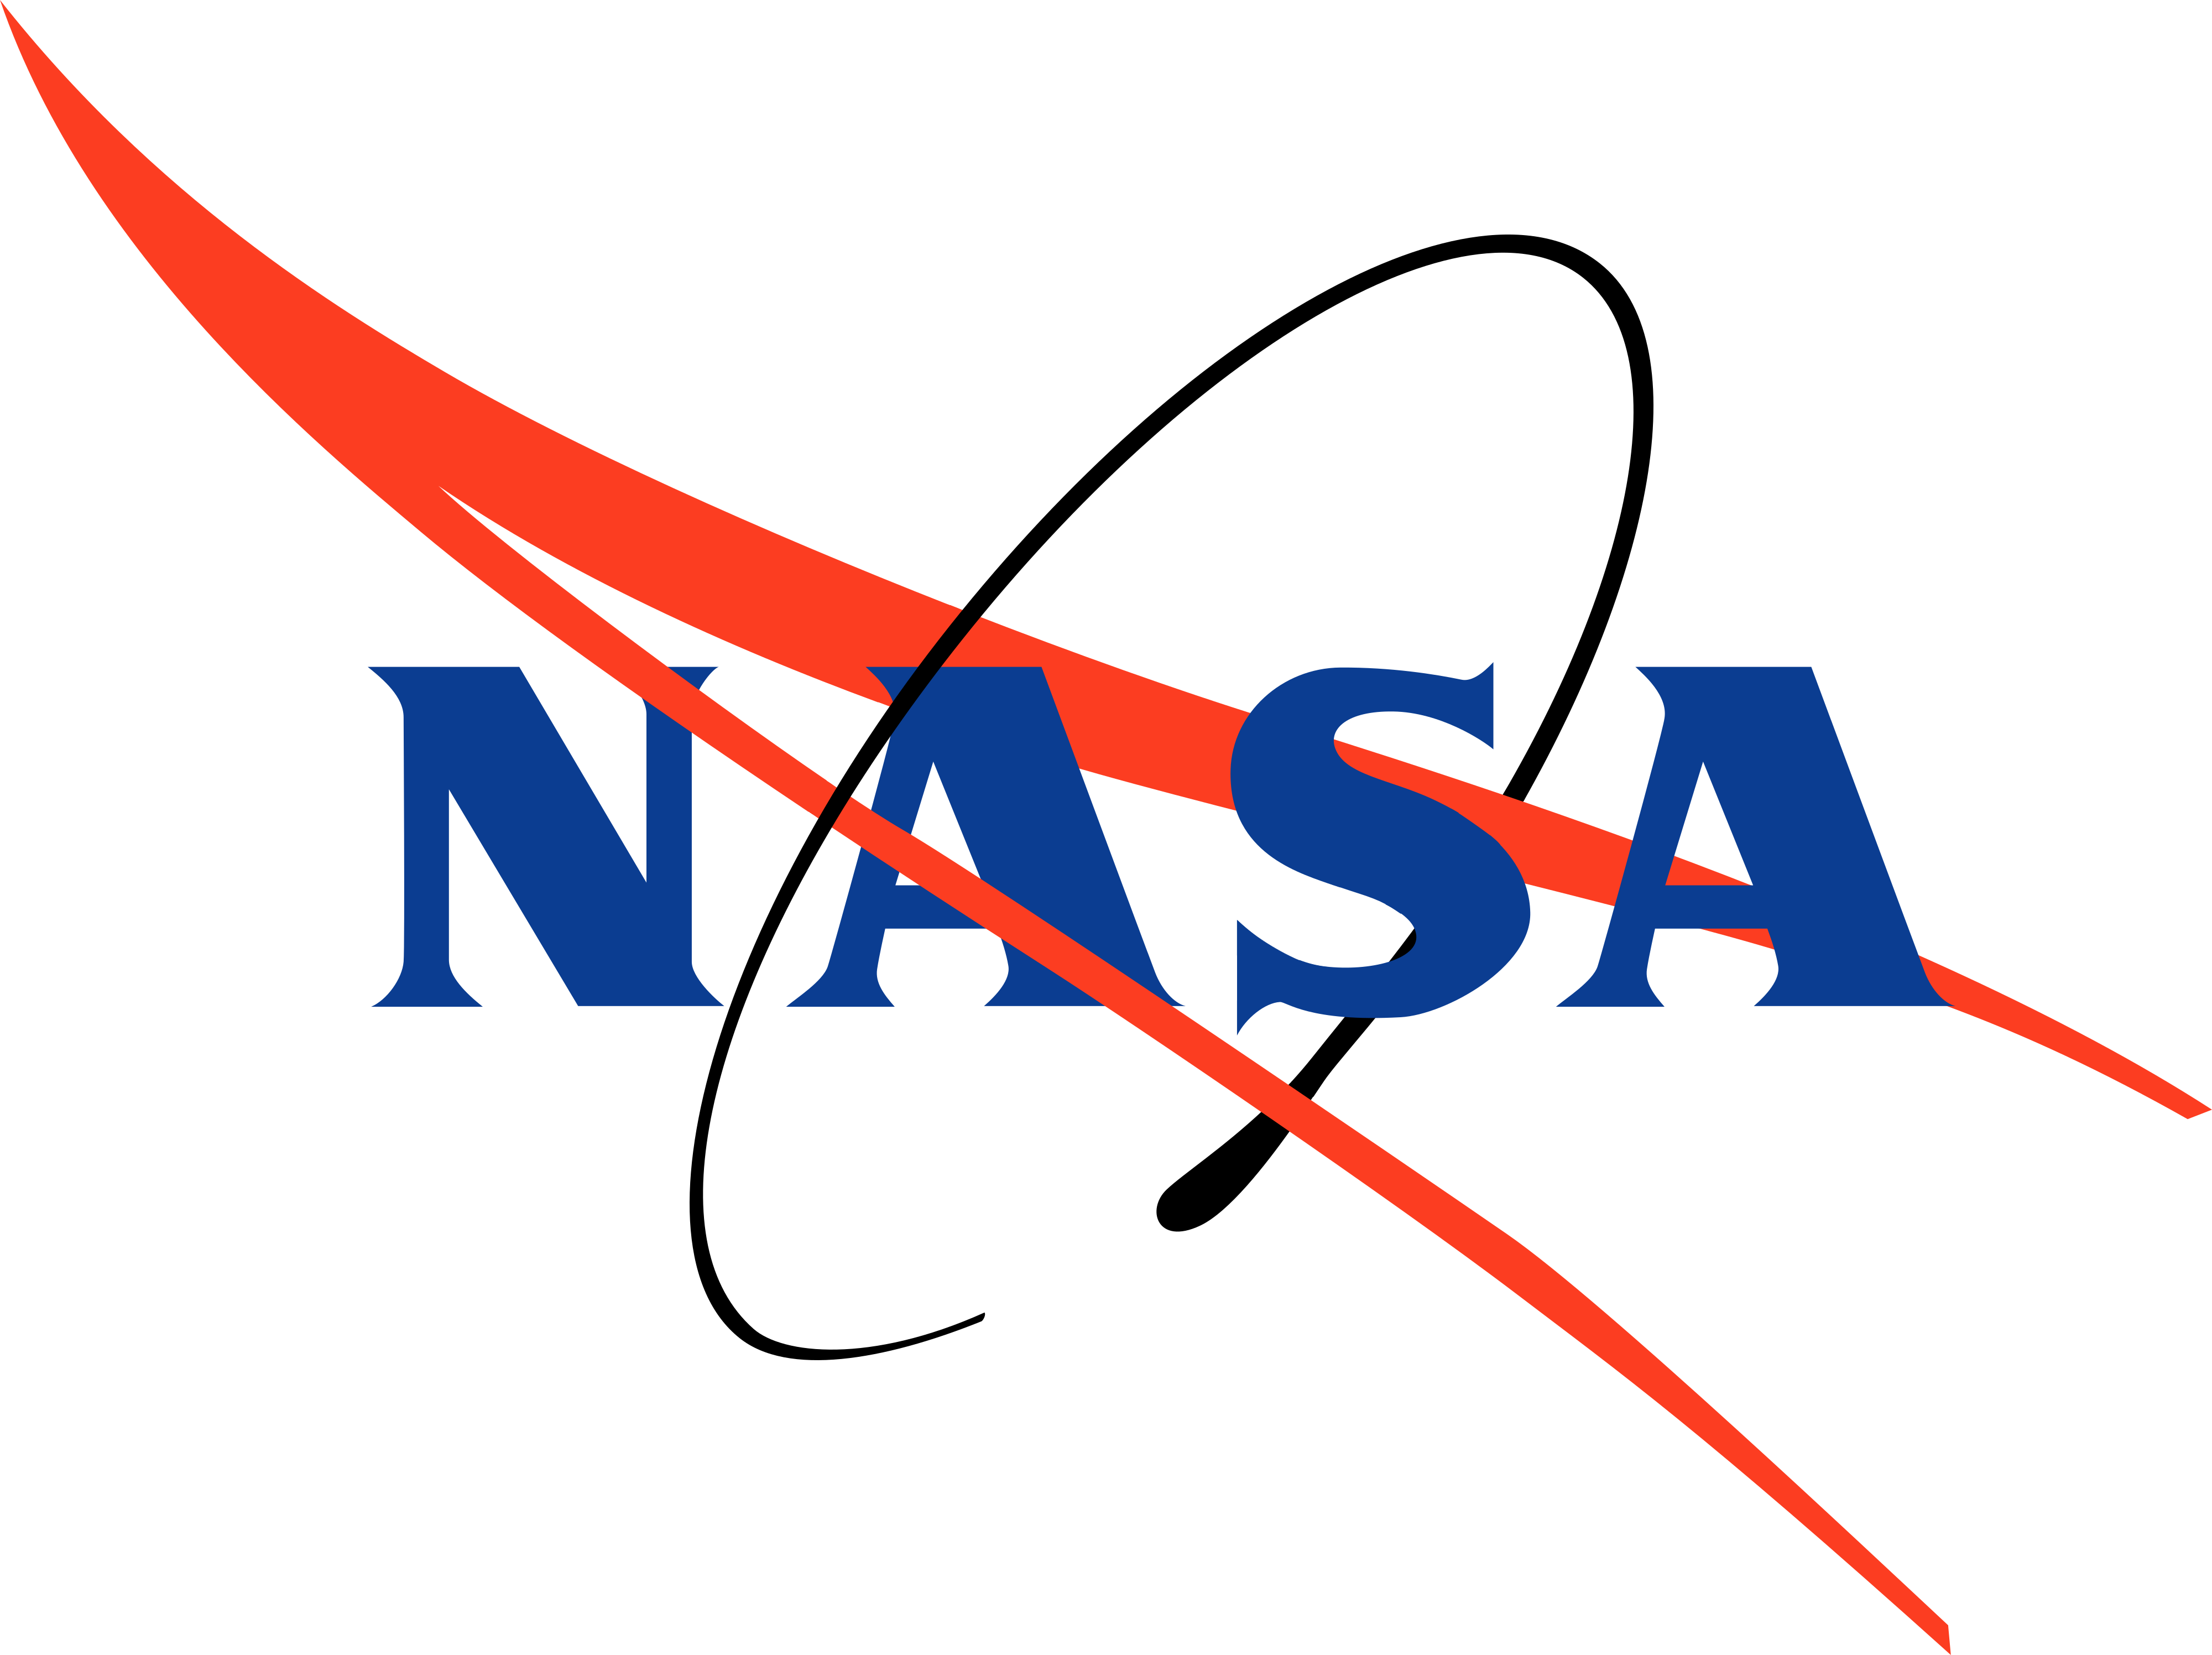 NASA Tail 2 by TimothyJC on DeviantArt